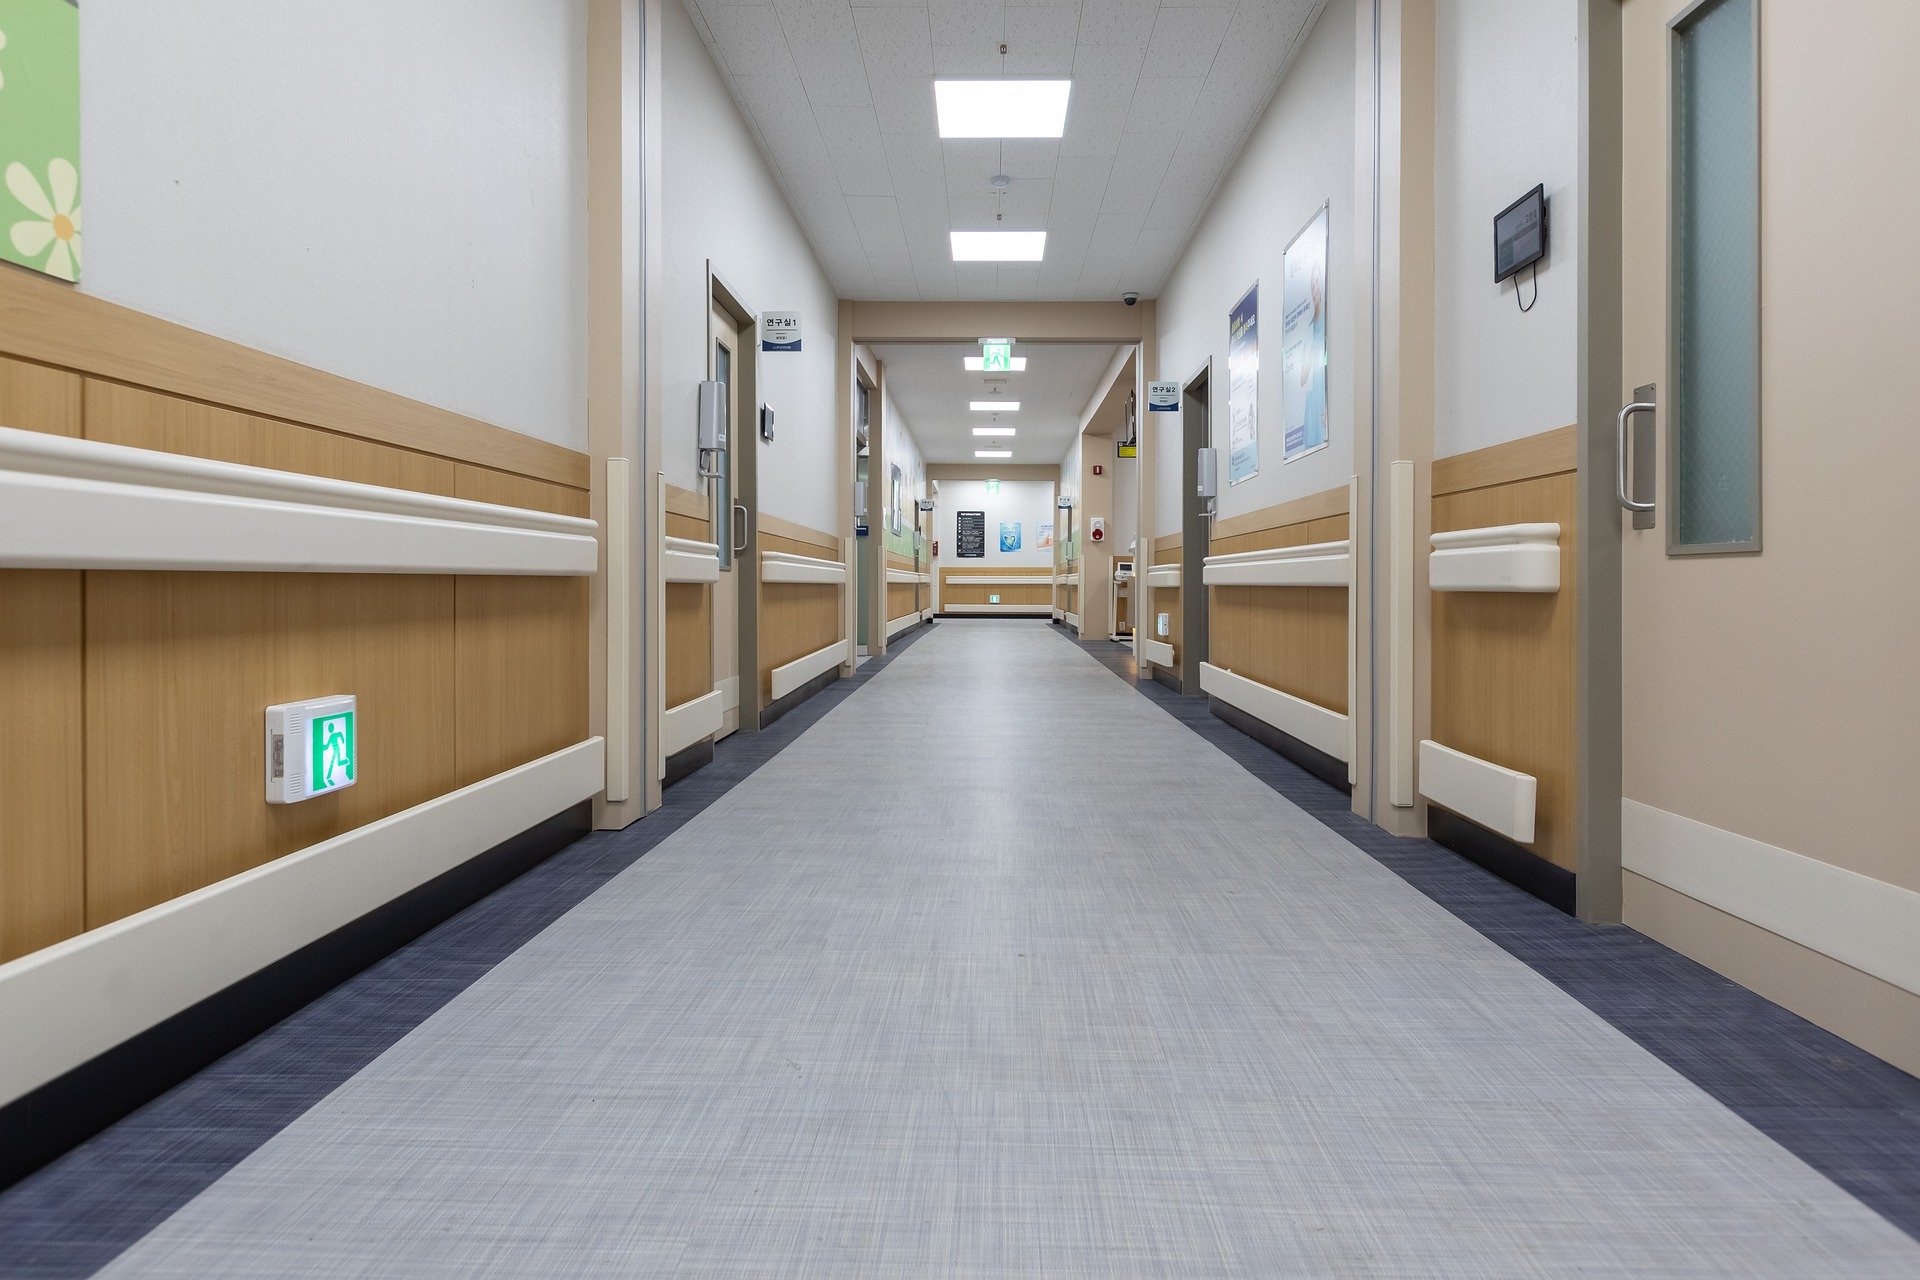 A corridor in a hospital